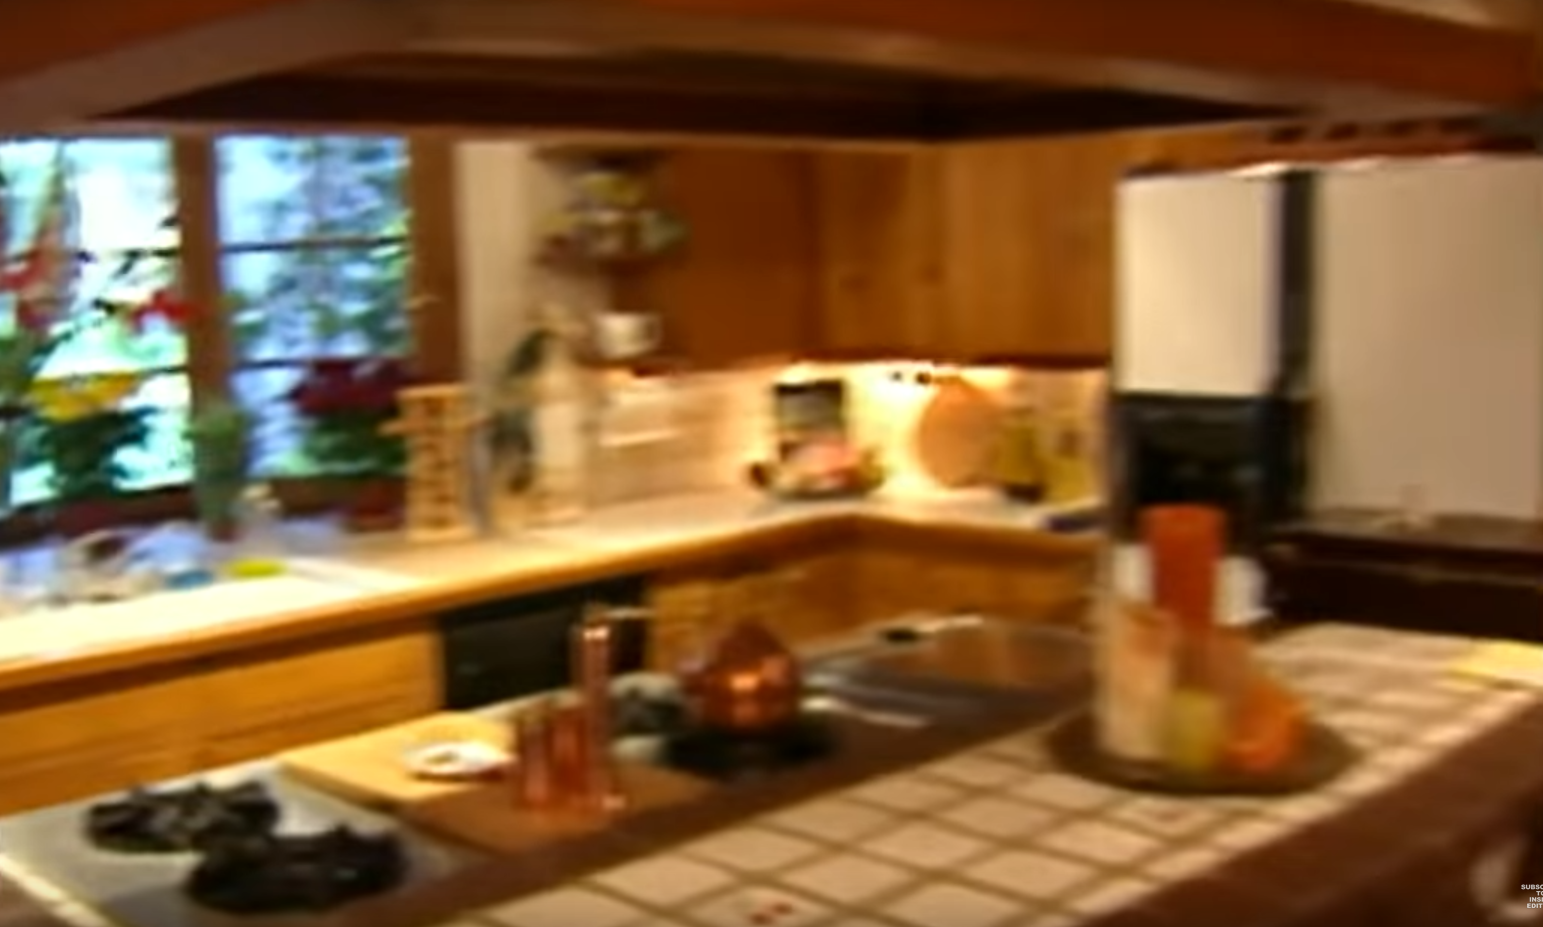 Tha Hartman's kitchen, Los Angeles, 1998 | Source: youtube.com/@InsideEdition